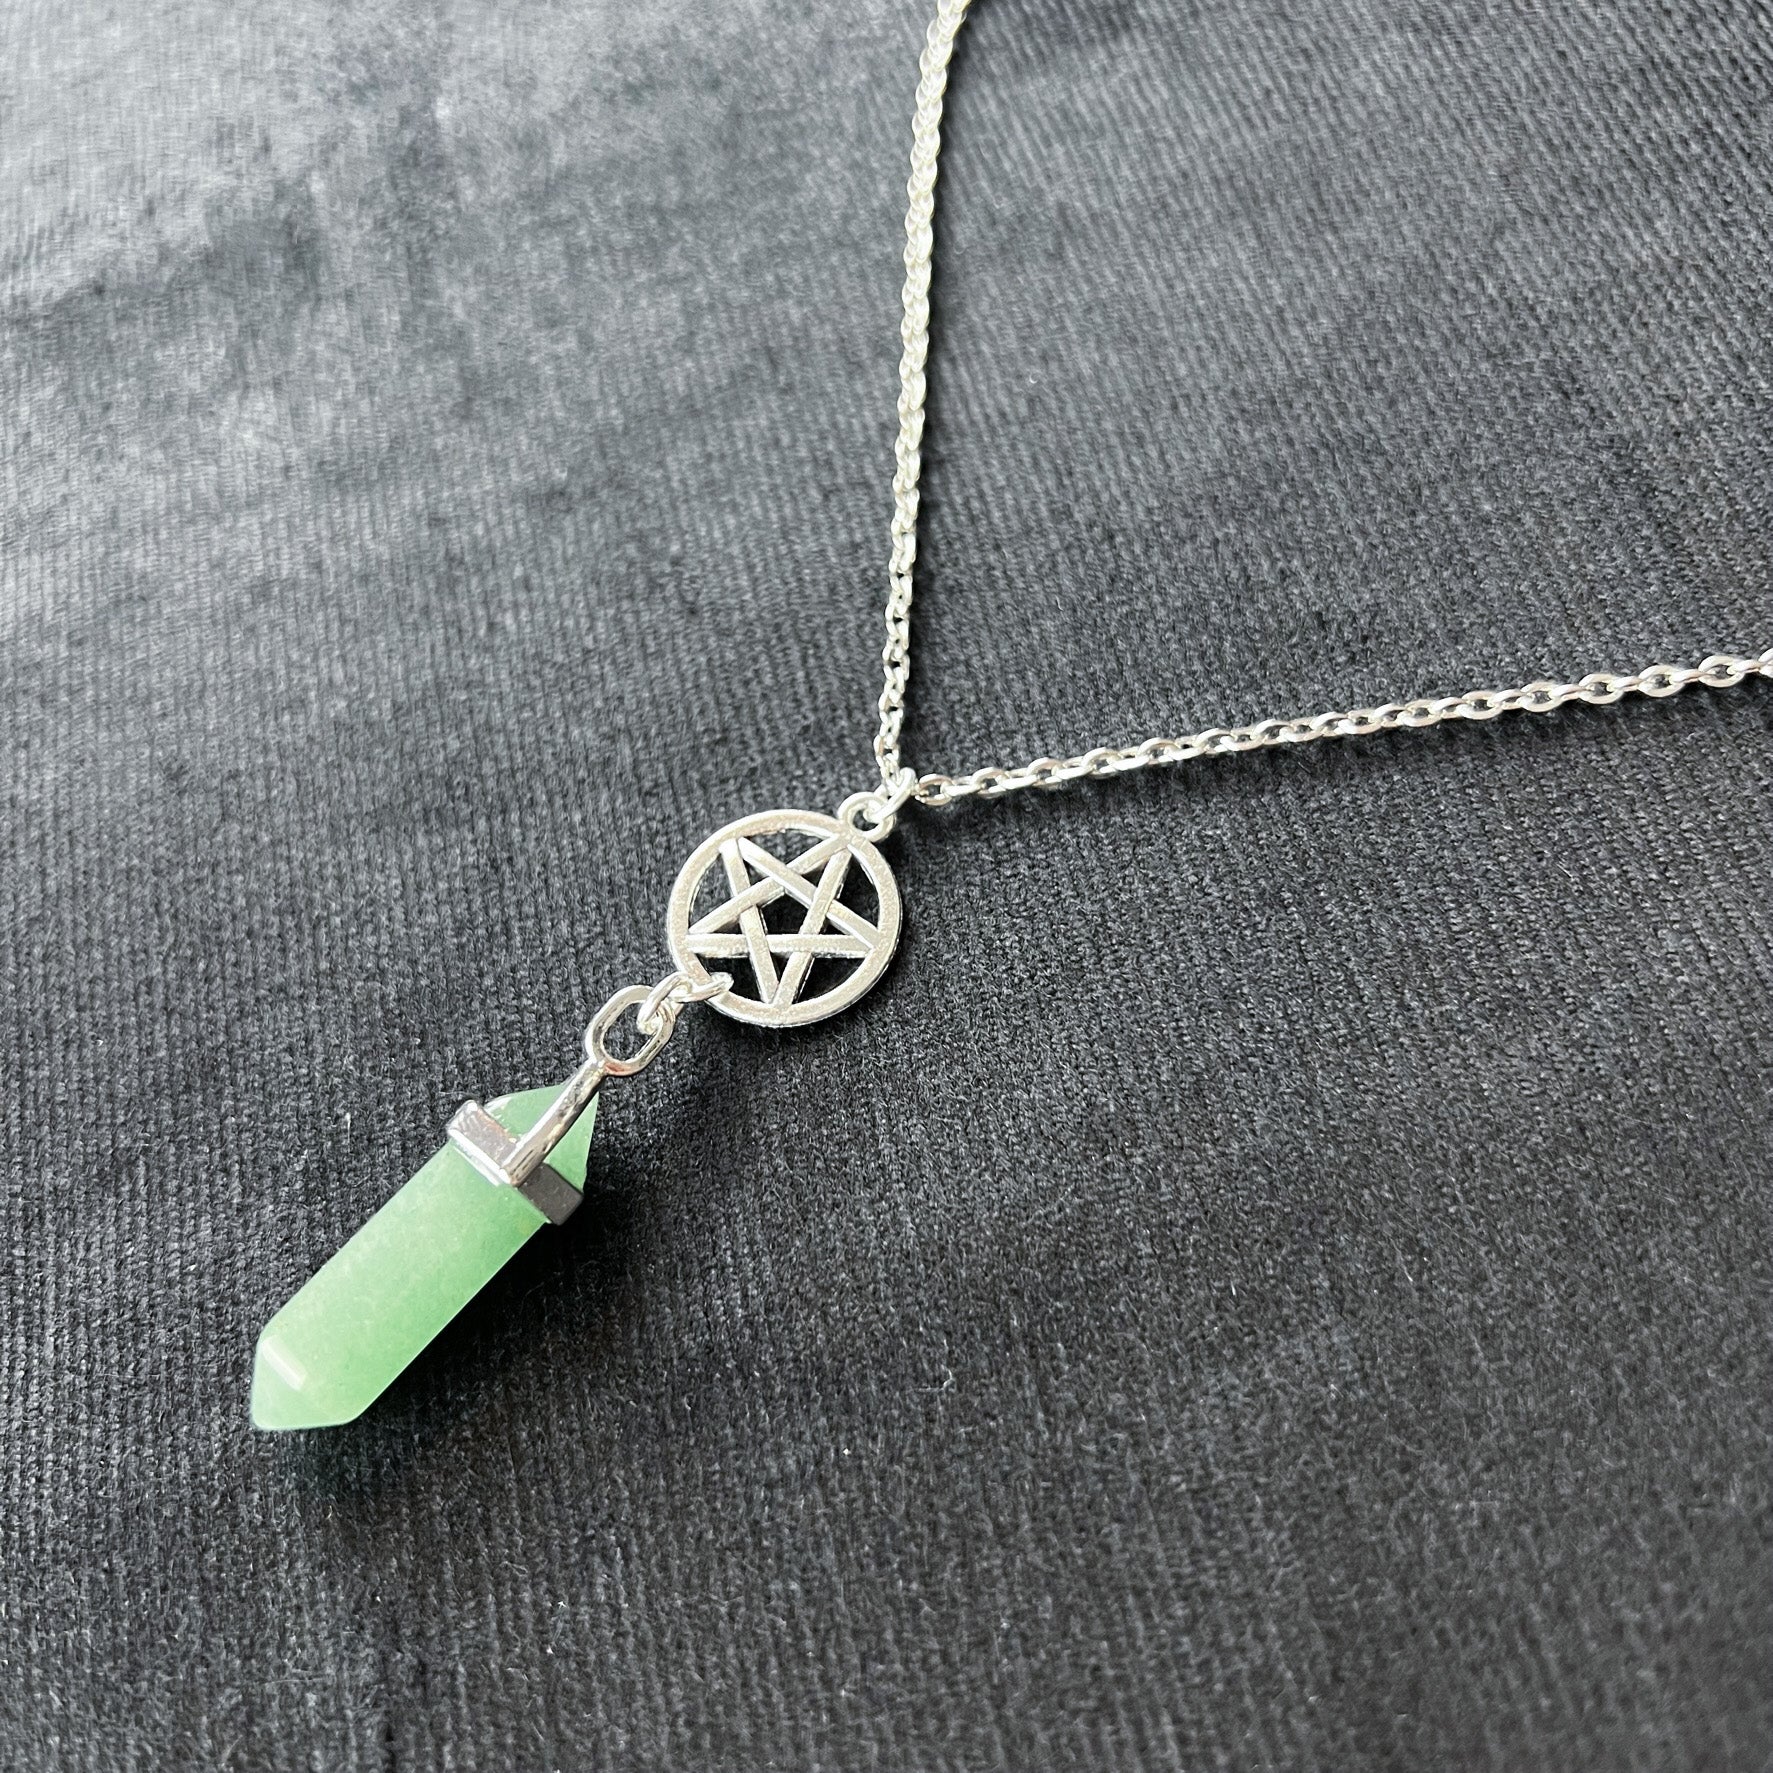 Pentacle pendulum necklace - choose your crystal: obsidian, quartz, rose quartz, or aventurine The French Witch shop